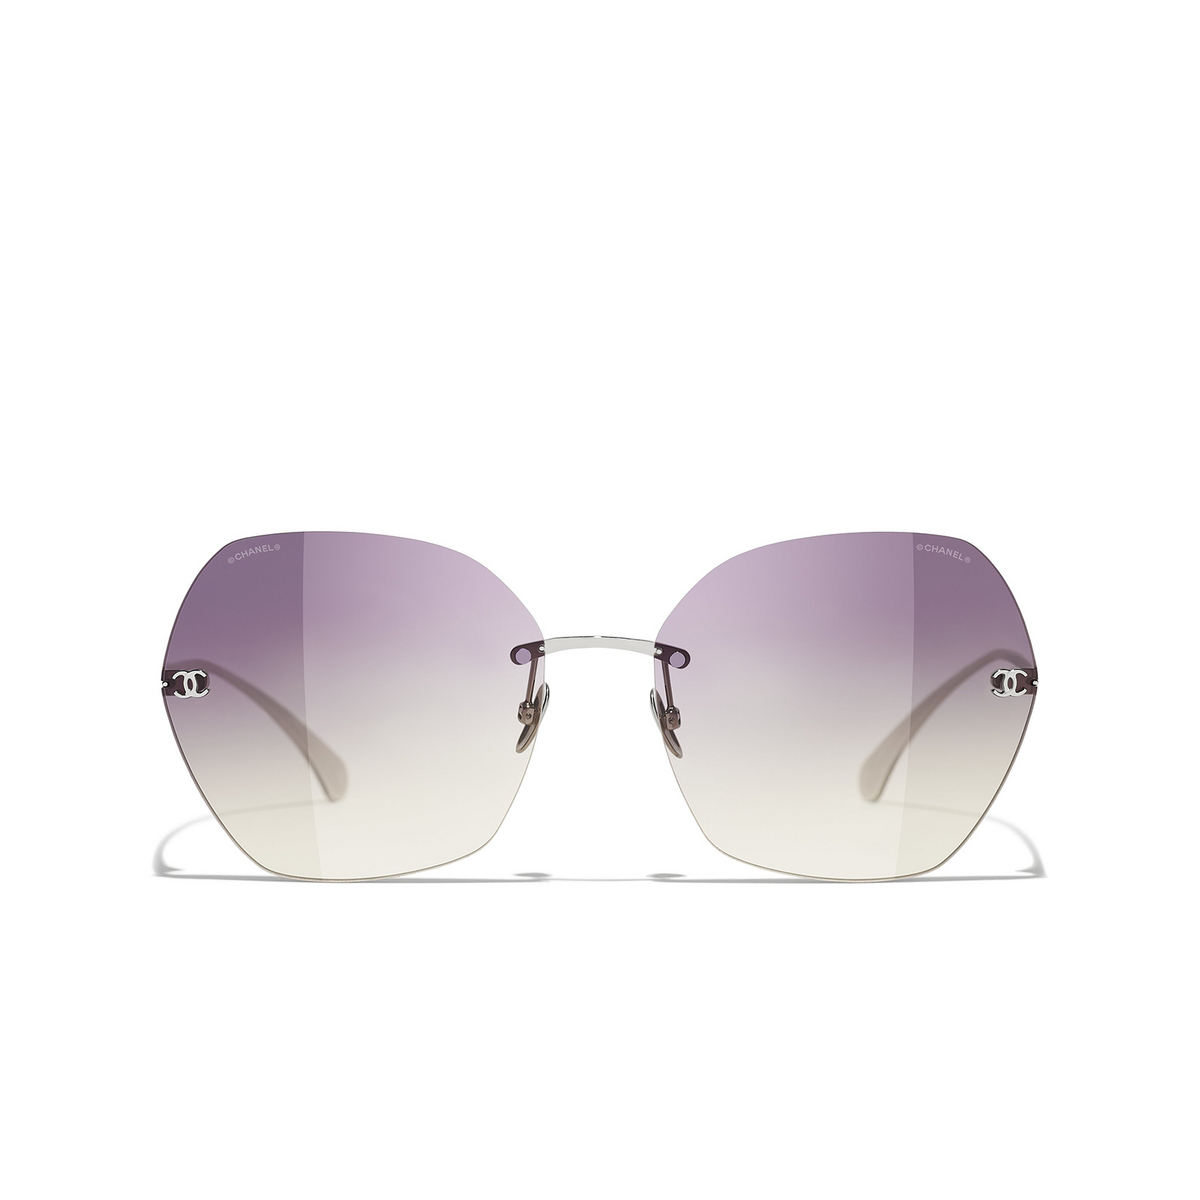 CHANEL square Sunglasses C1242Q Light Silver - front view